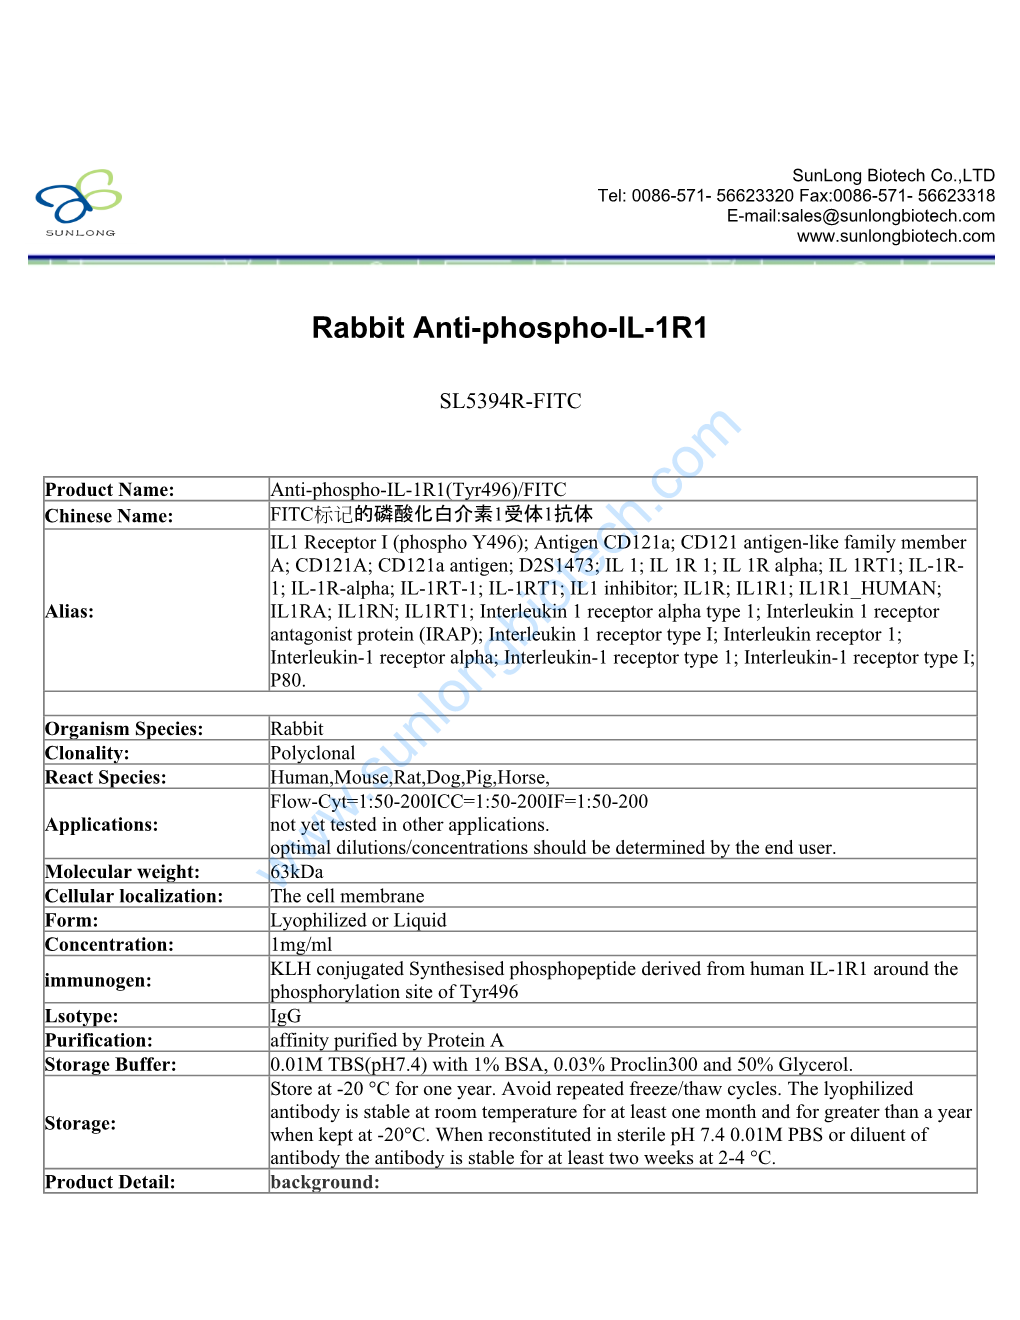 Rabbit Anti-Phospho-IL-1R1-SL5394R-FITC